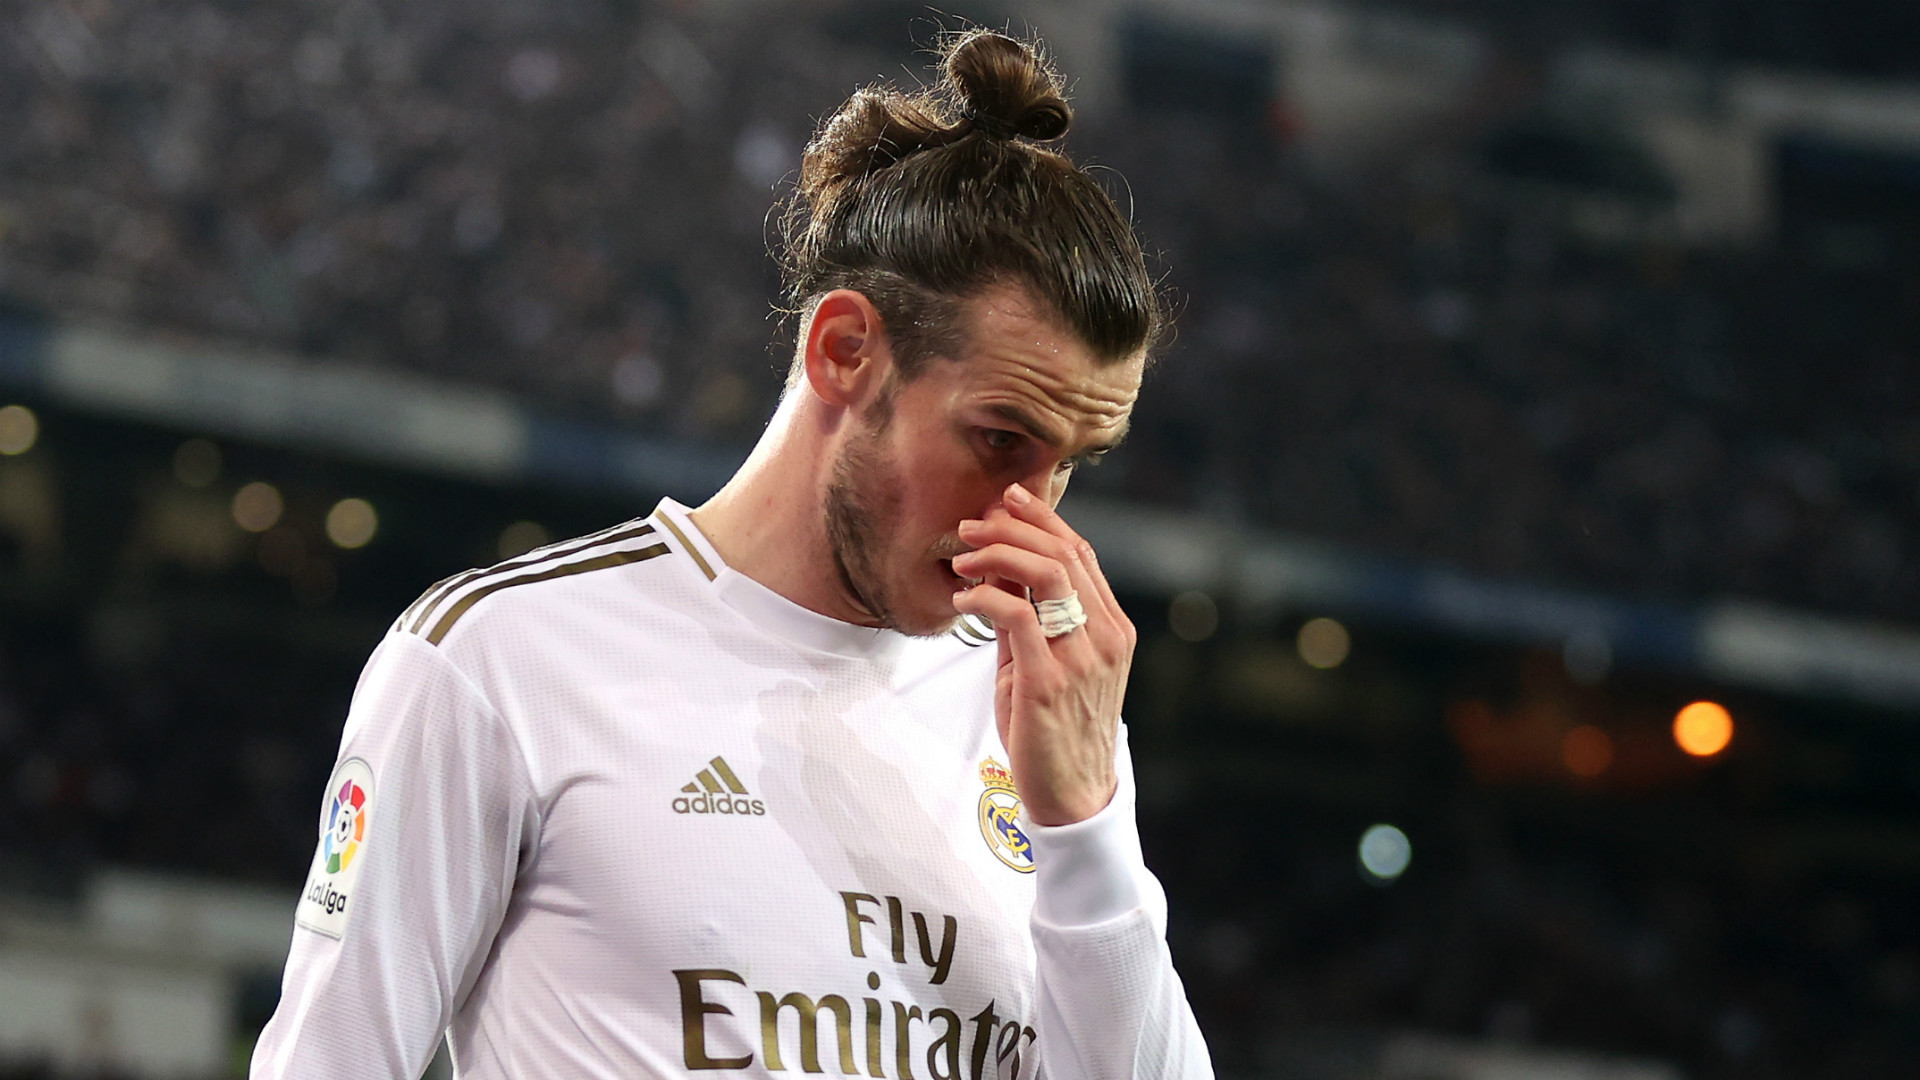 Giggs hopes Real Madrid struggles do not tarnish Bale’s legacy